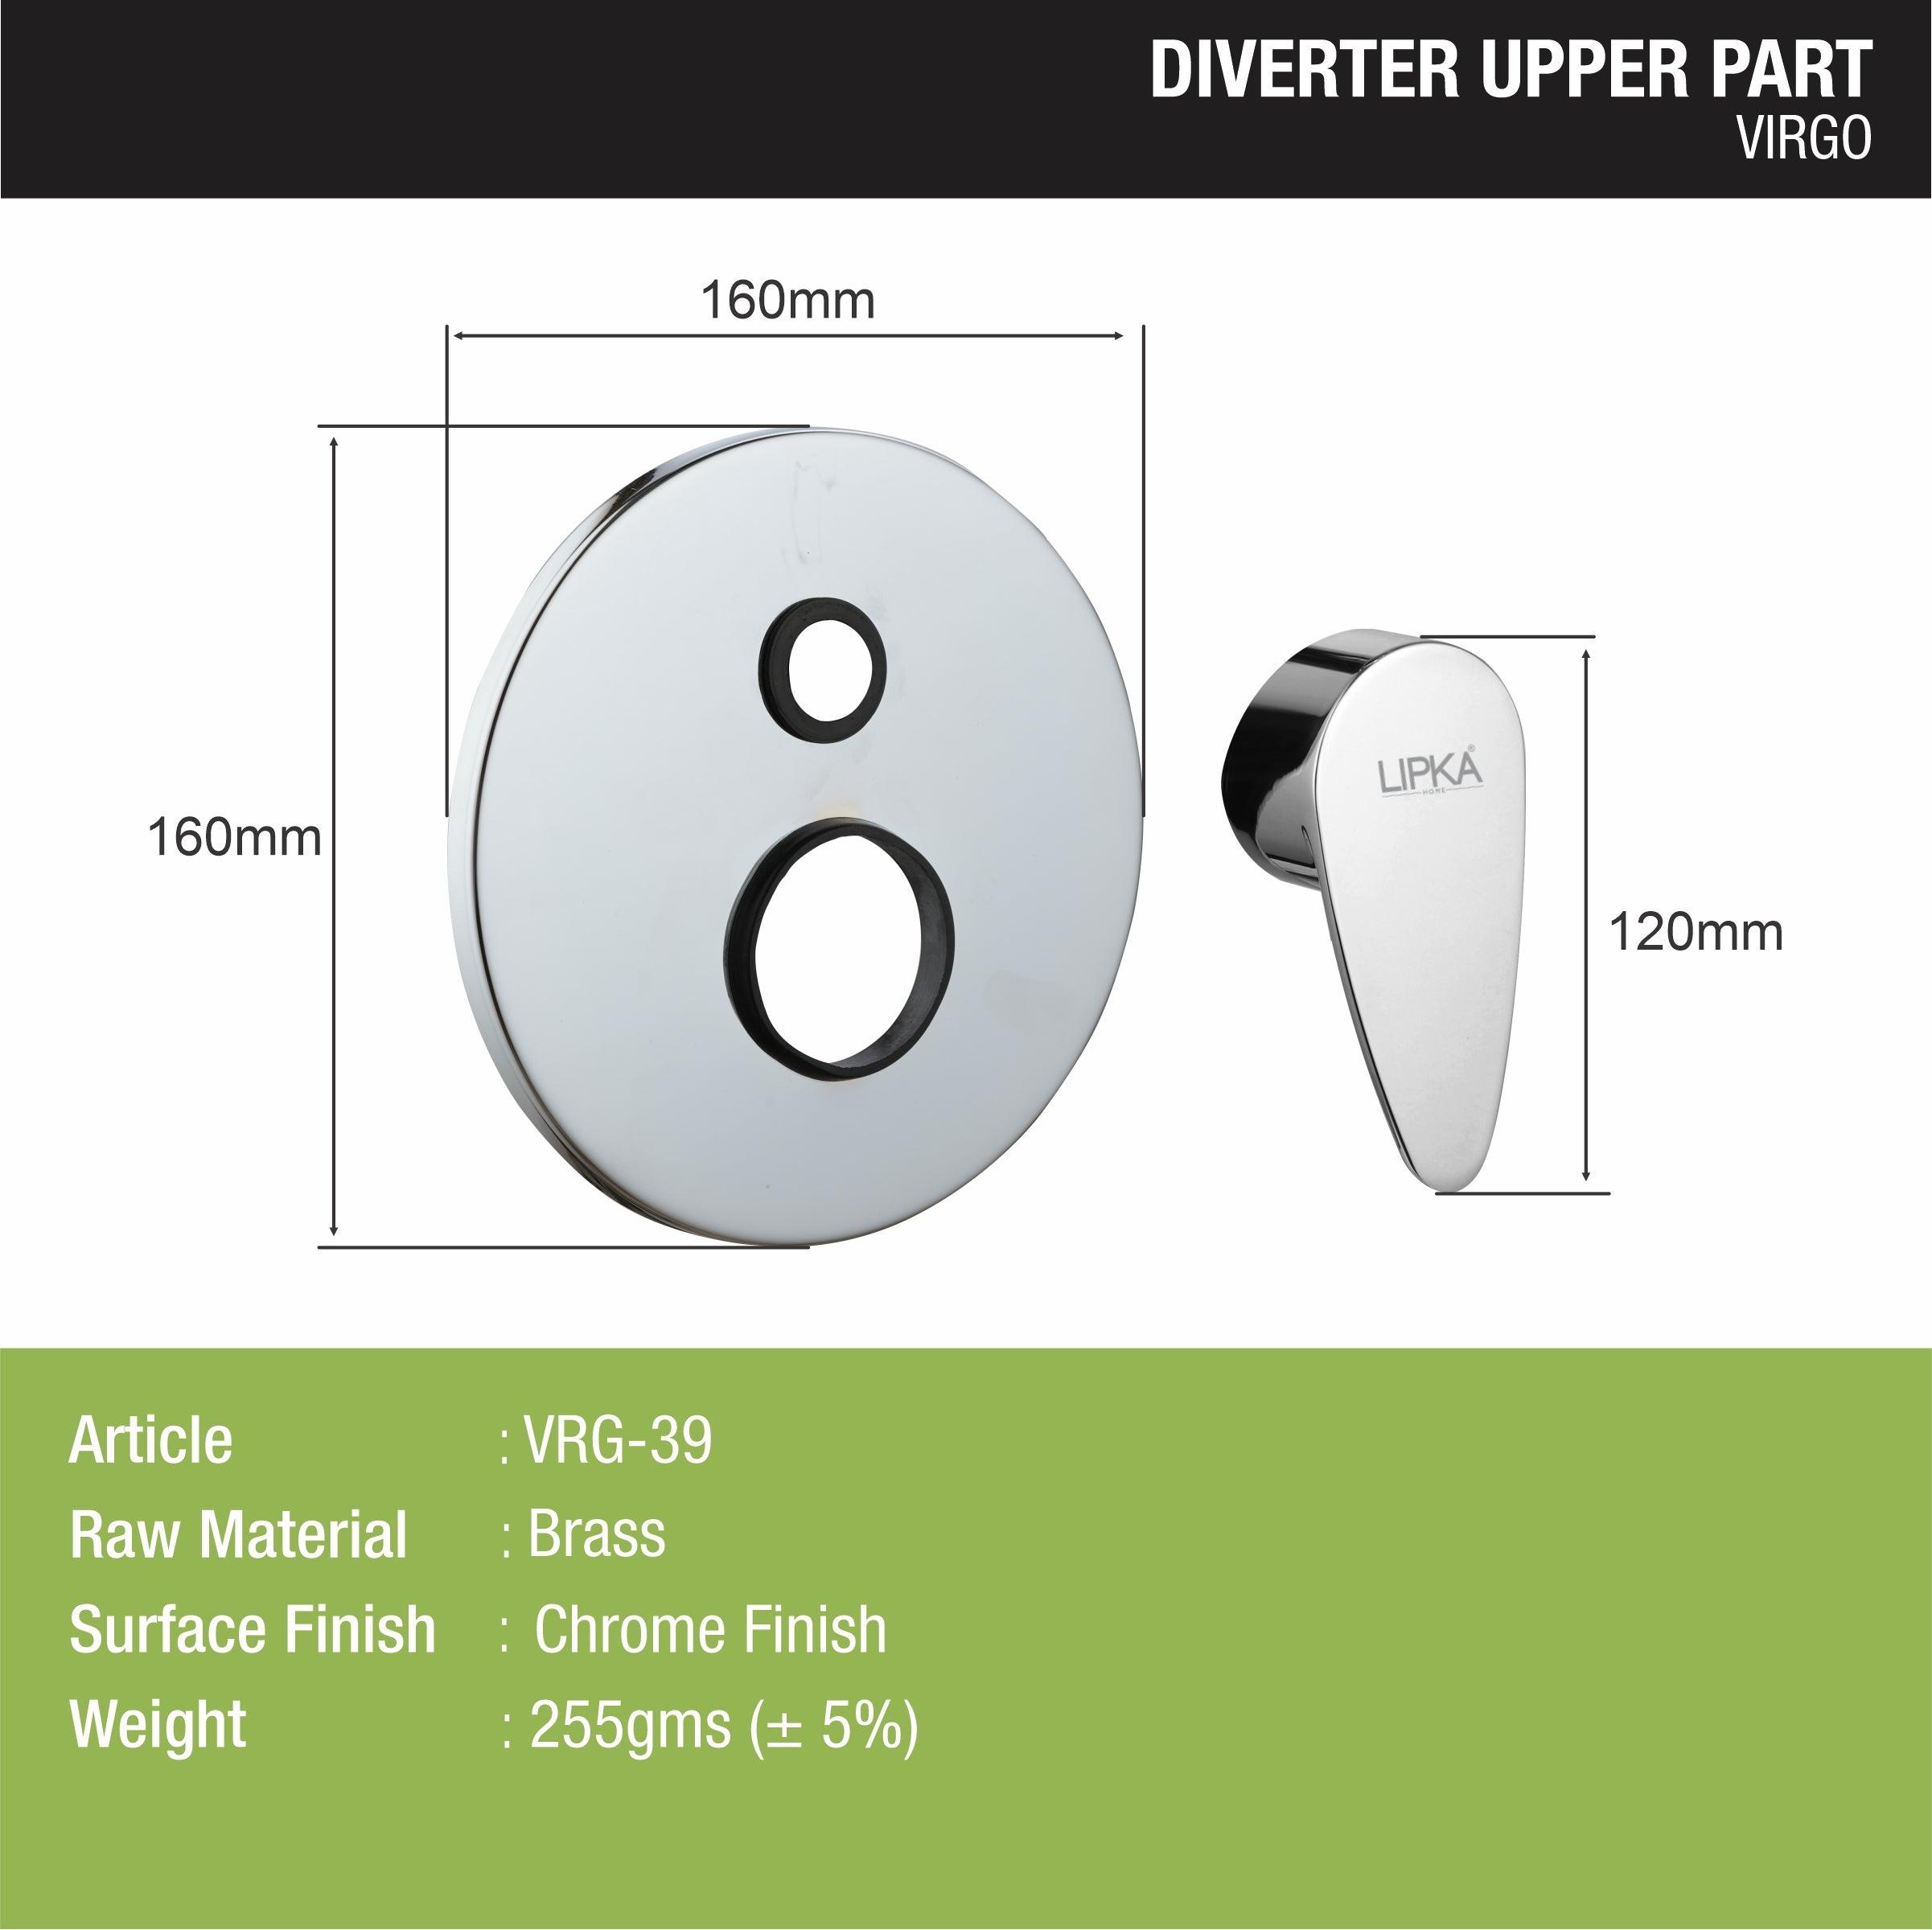 Virgo Diverter (Upper Part) sizes and dimensions